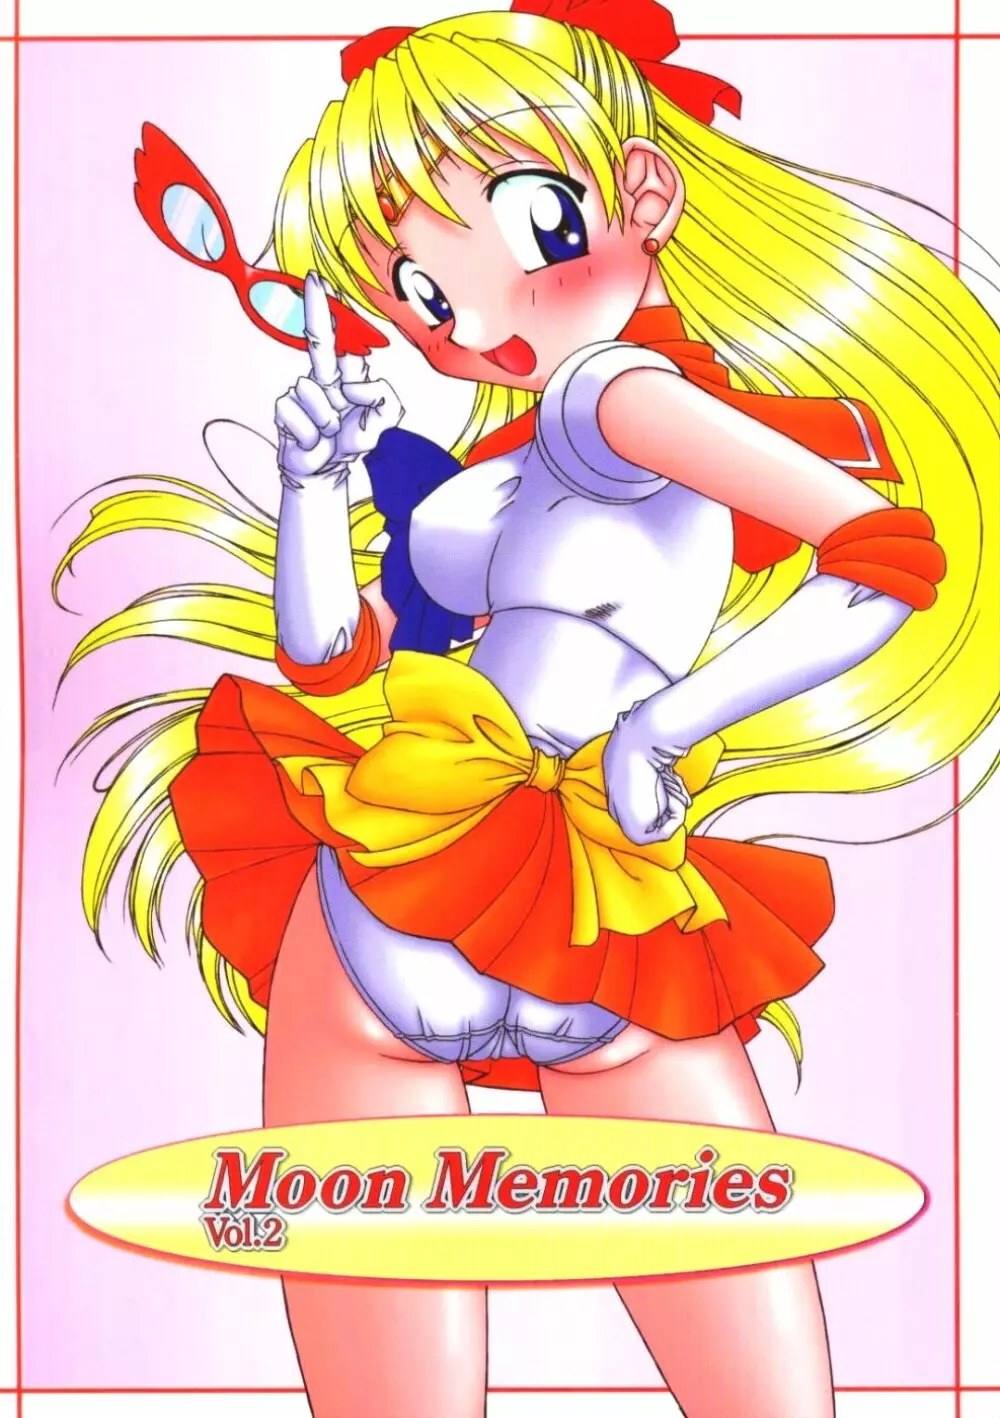 Moon Memories Vol.2